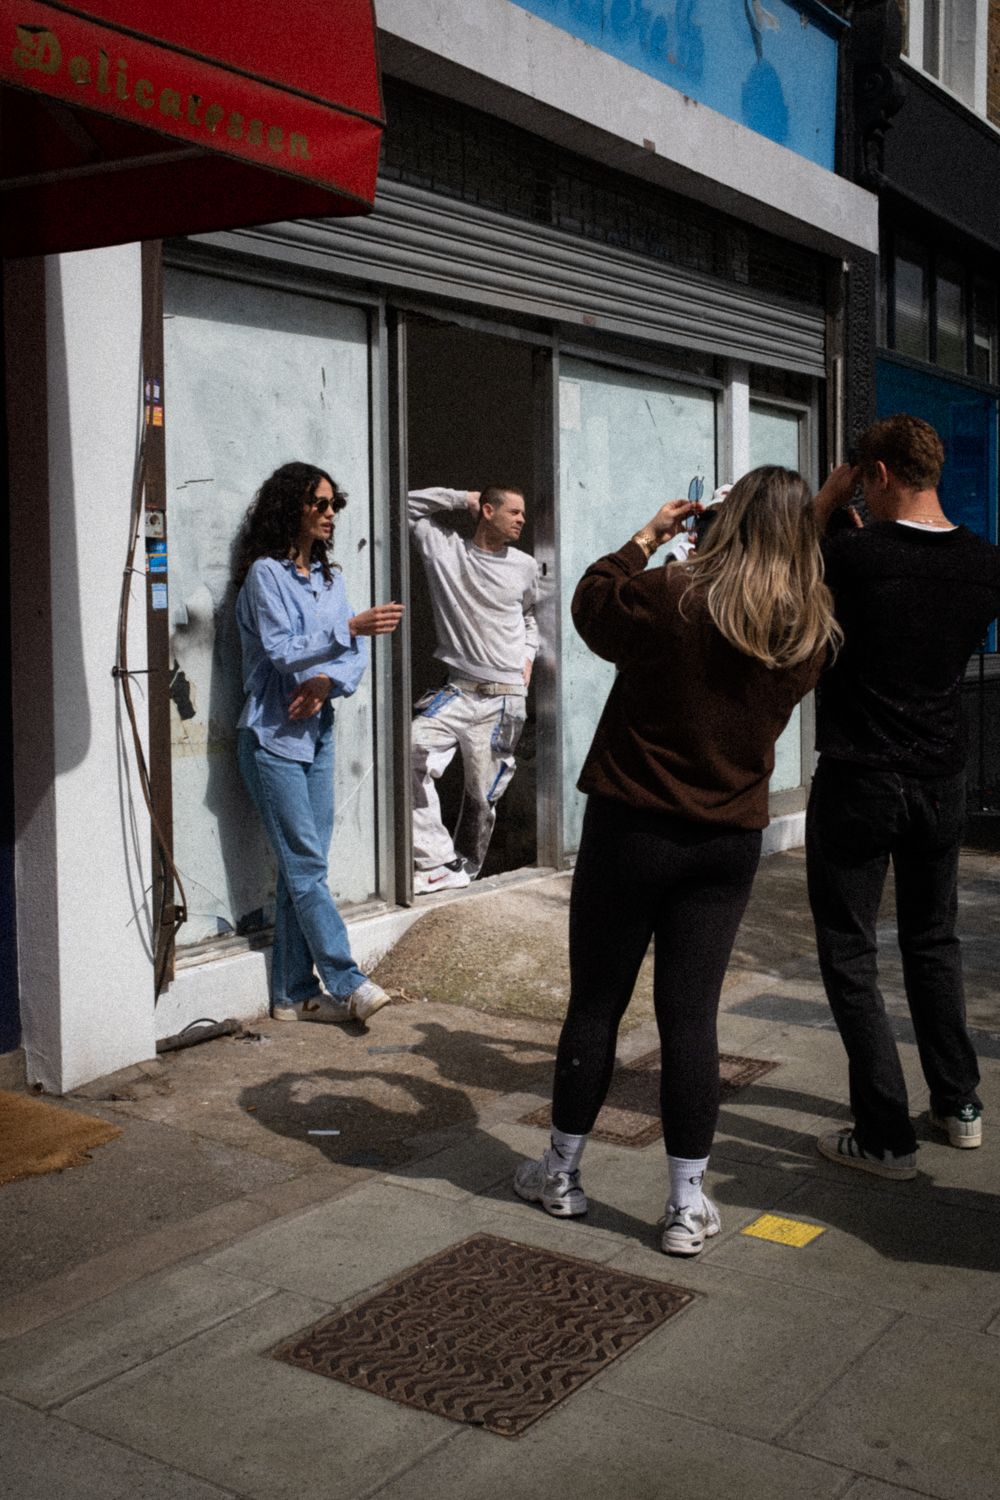 Spontanes Fotoshooting im Londoner Stadtteil Notting Hill. Ein Bauarbeiter schließt sich spontan an.